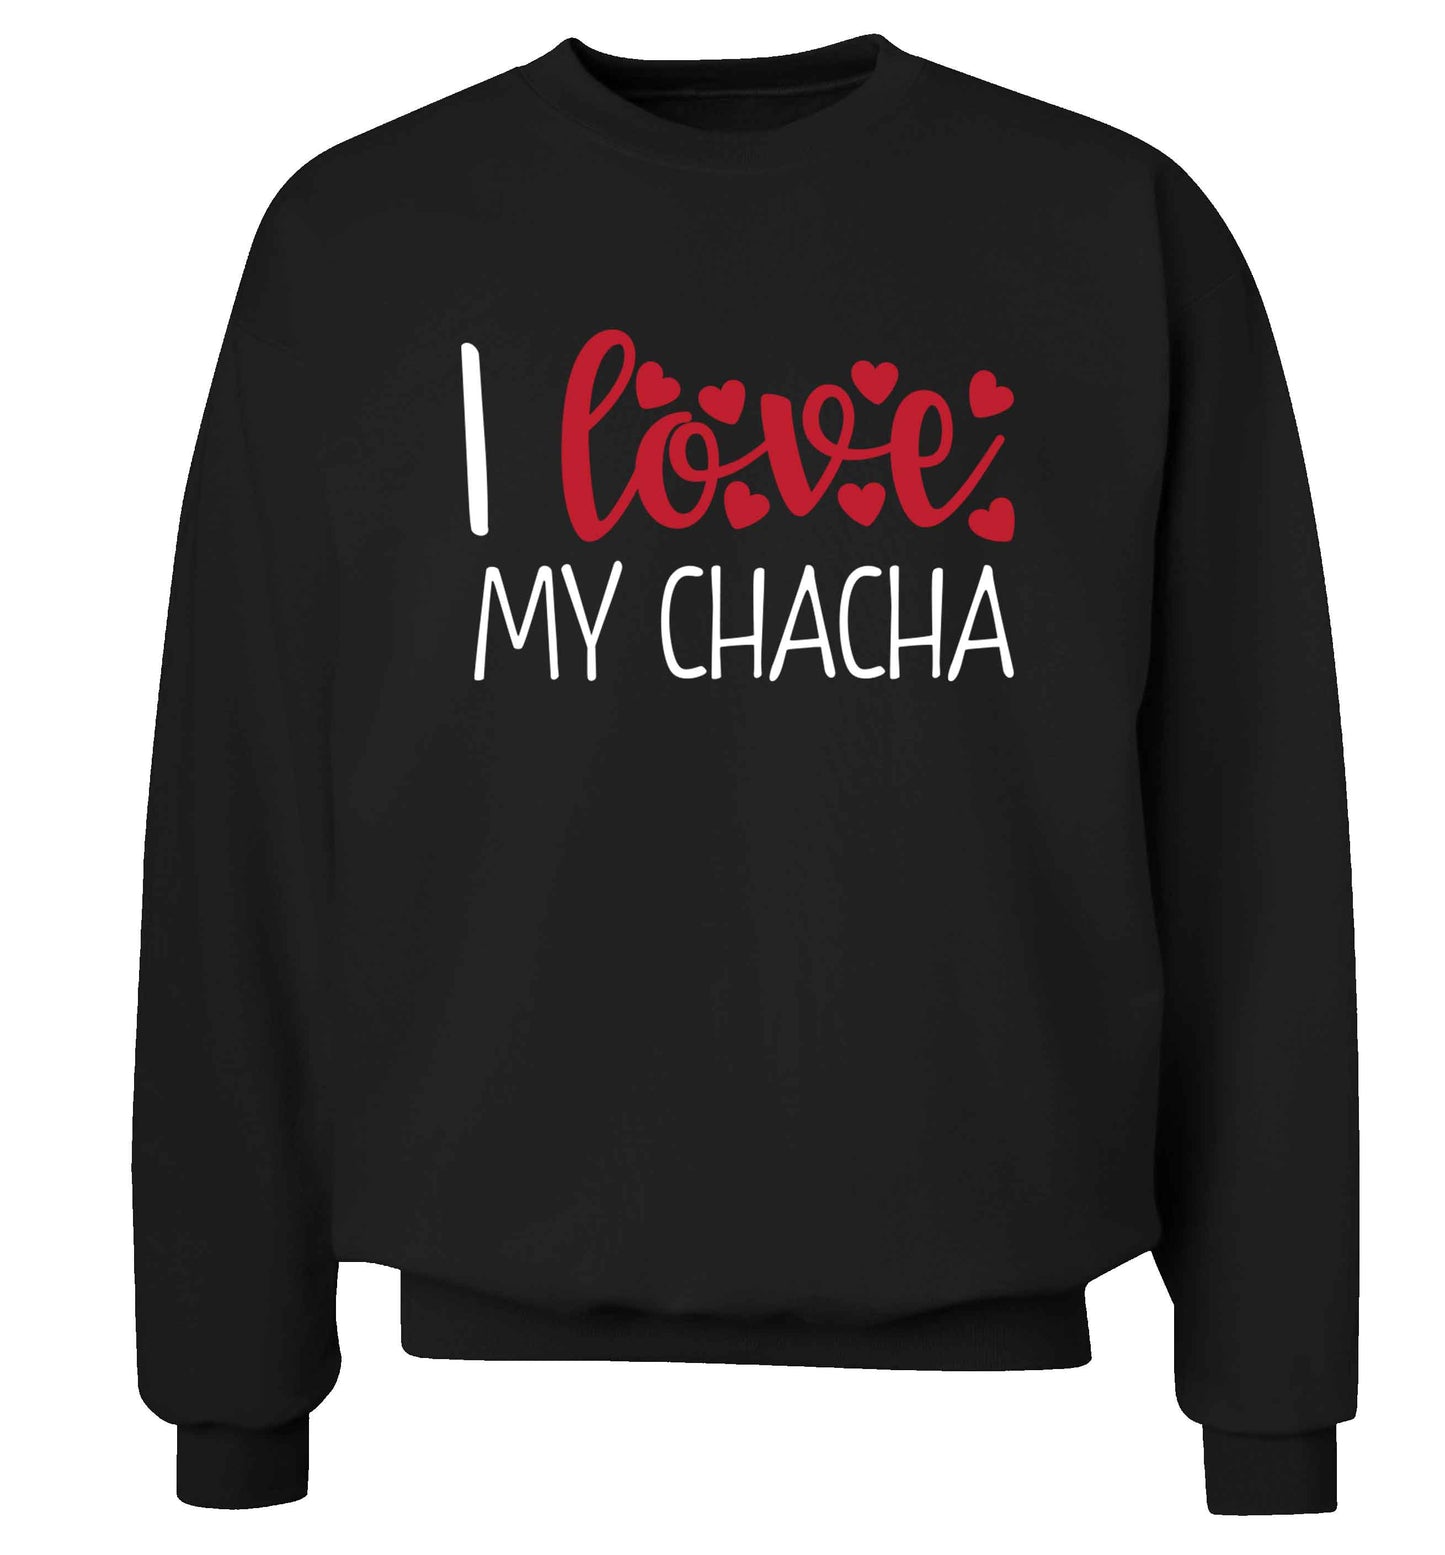 I love my chacha Adult's unisex black Sweater 2XL